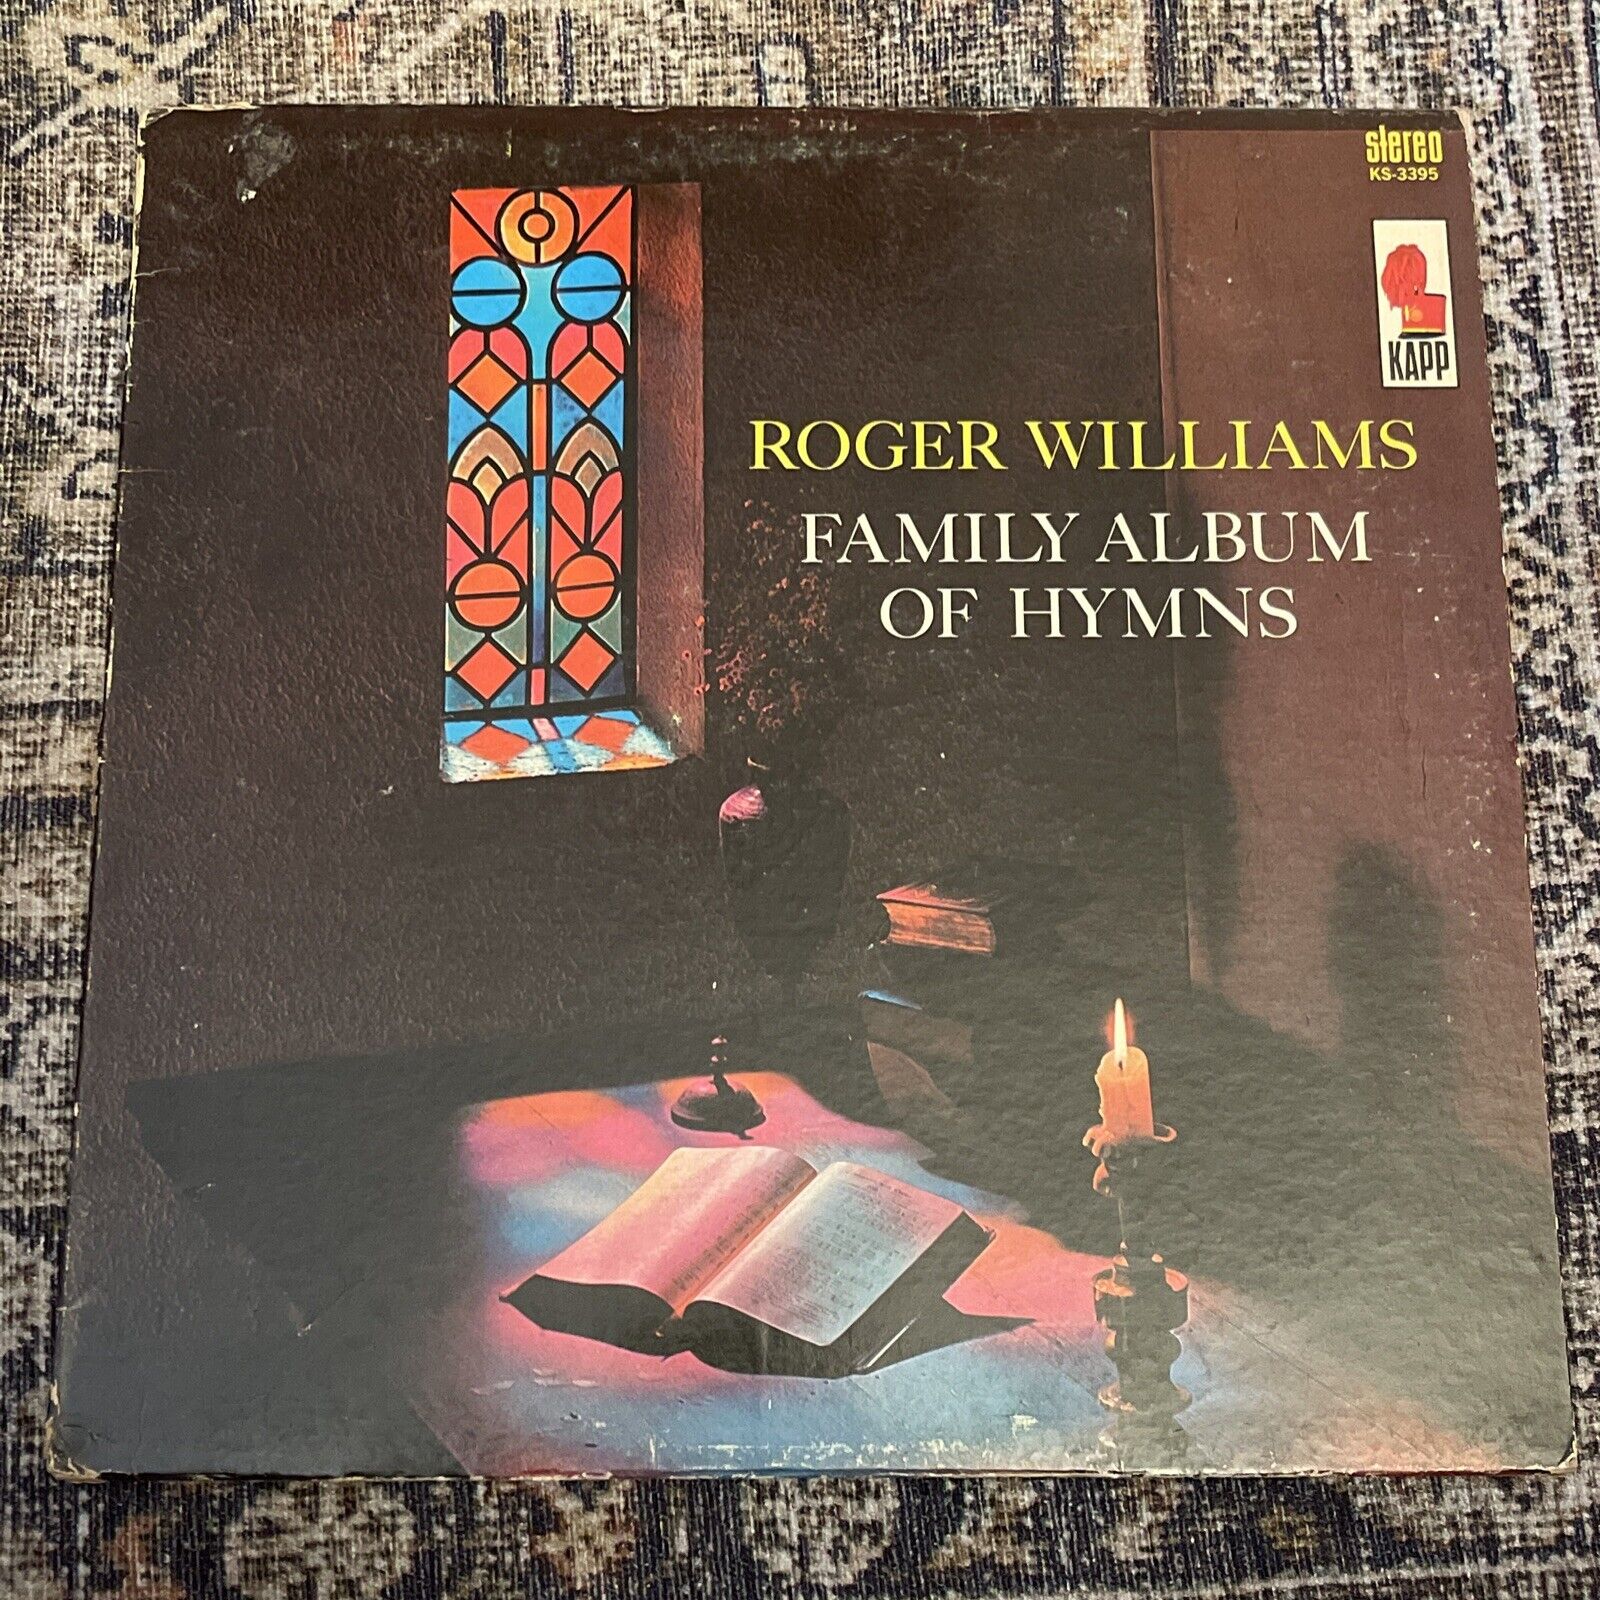 Roger Williams Family Album Of Hymns Vinyl LP Album 1964  Kapp Records Ks3395